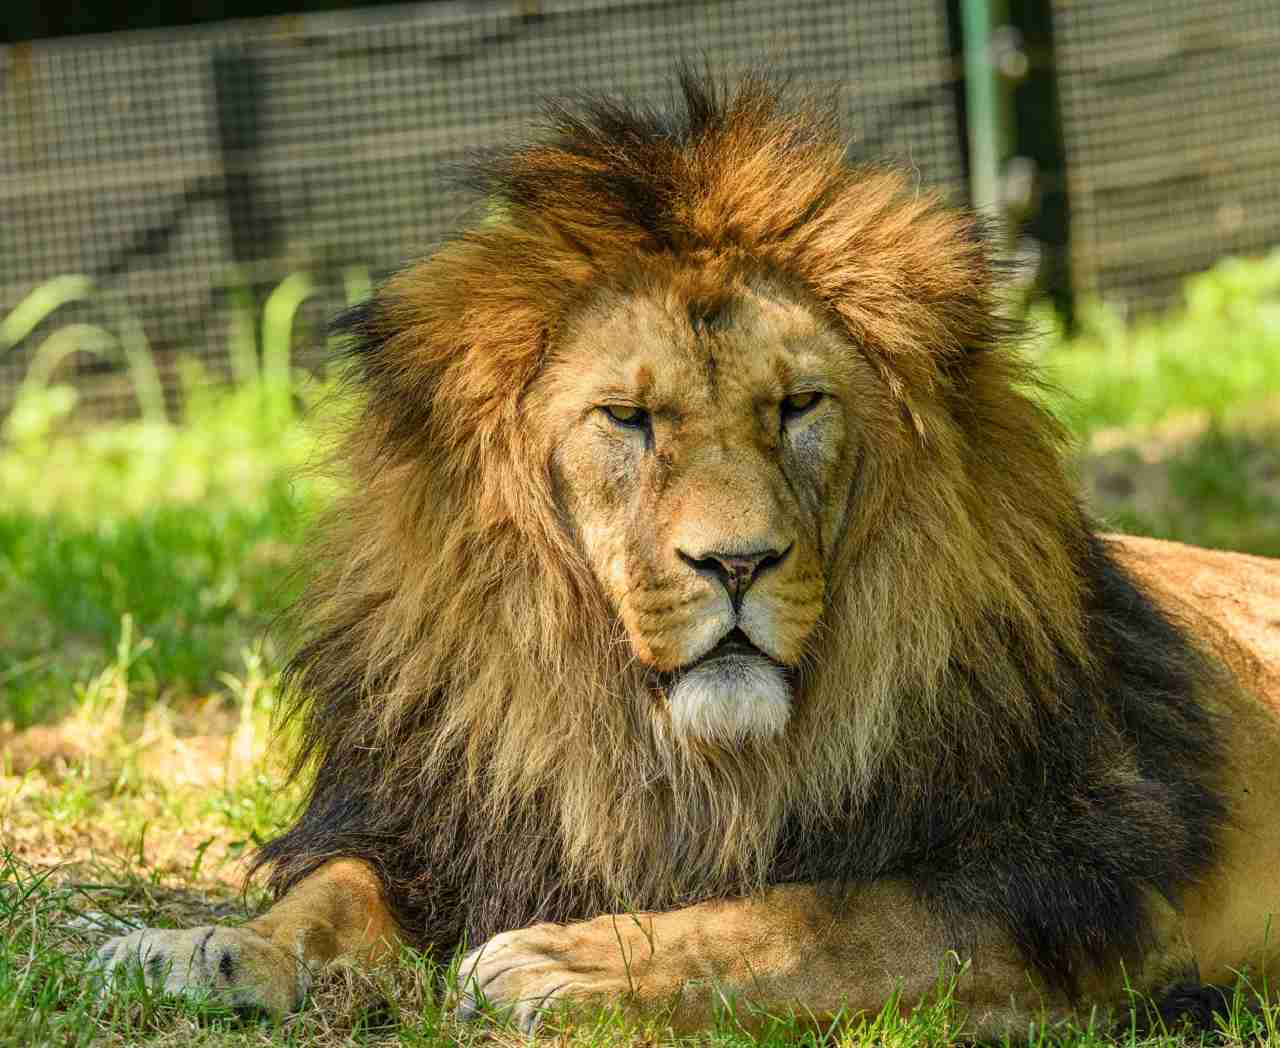 Serene lion sitting gracefully in its enclosure at Banham Zoo.